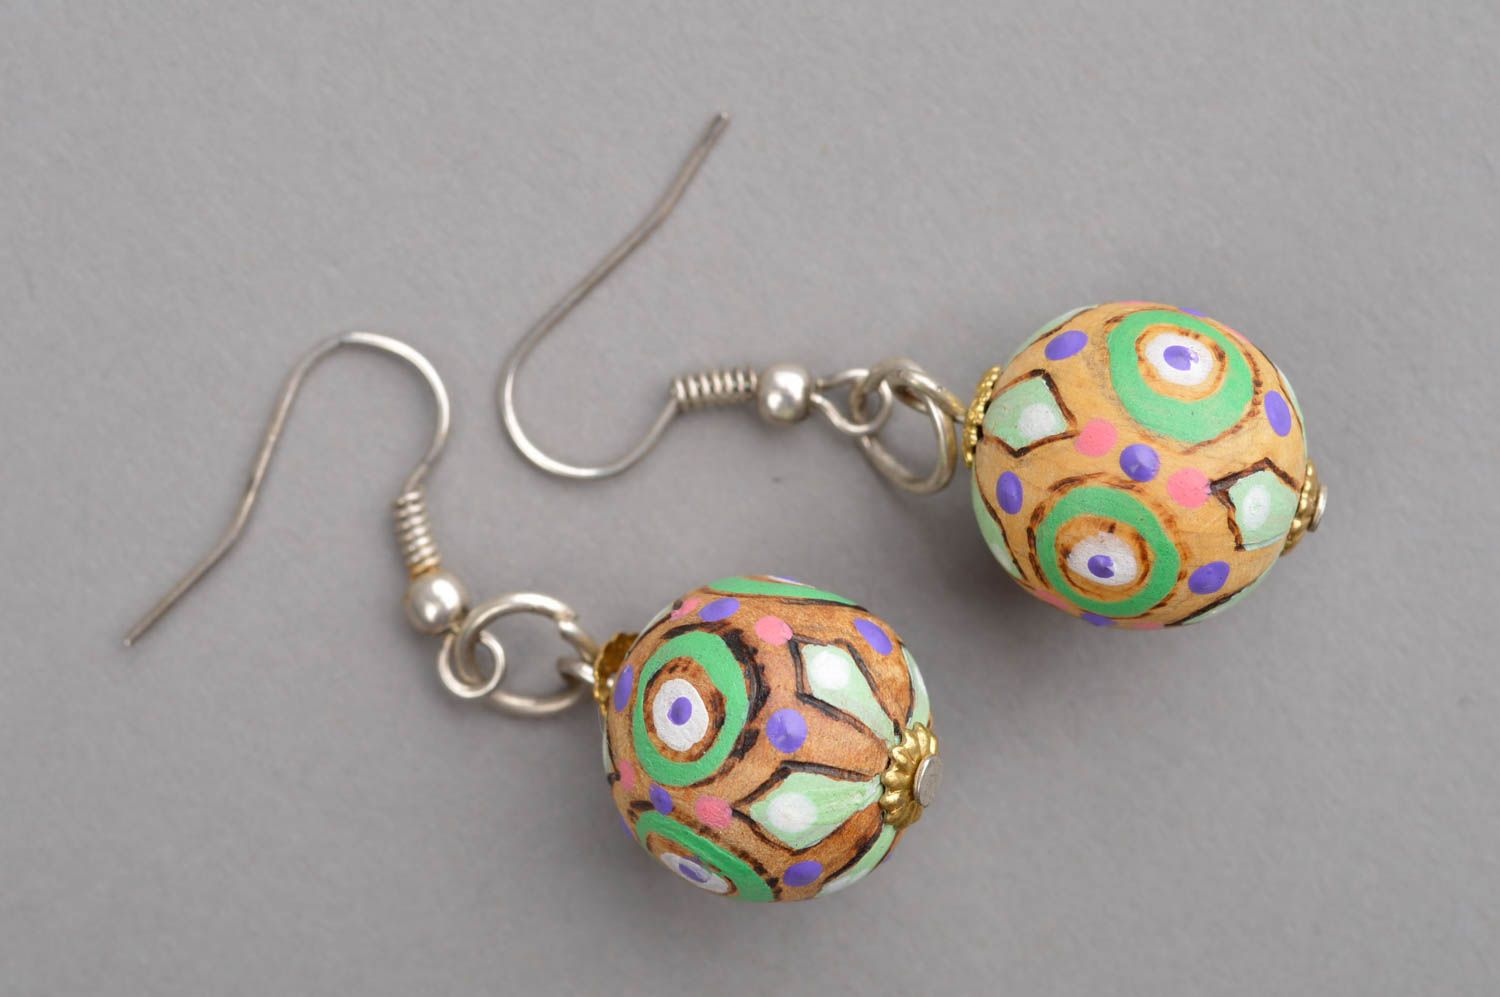 Handmade wooden earrings ball earrings beautiful jewellery gifts for her photo 2